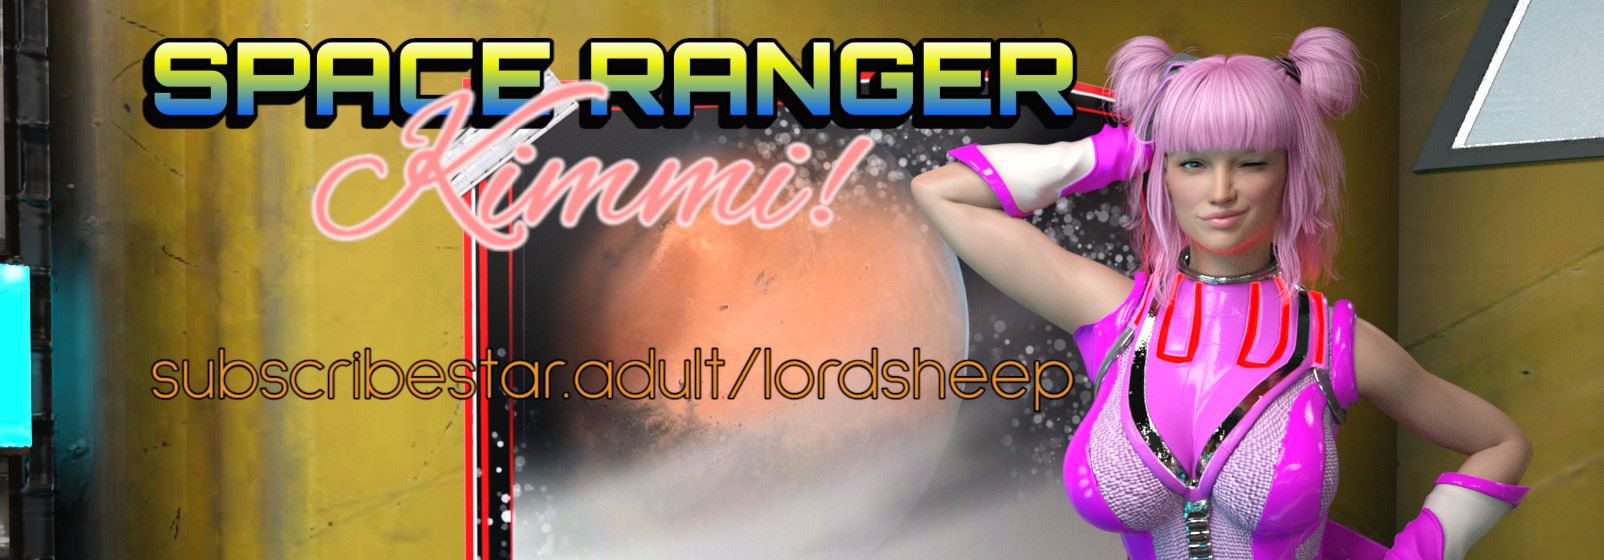 Space Ranger Kimmi! porn xxx game download cover